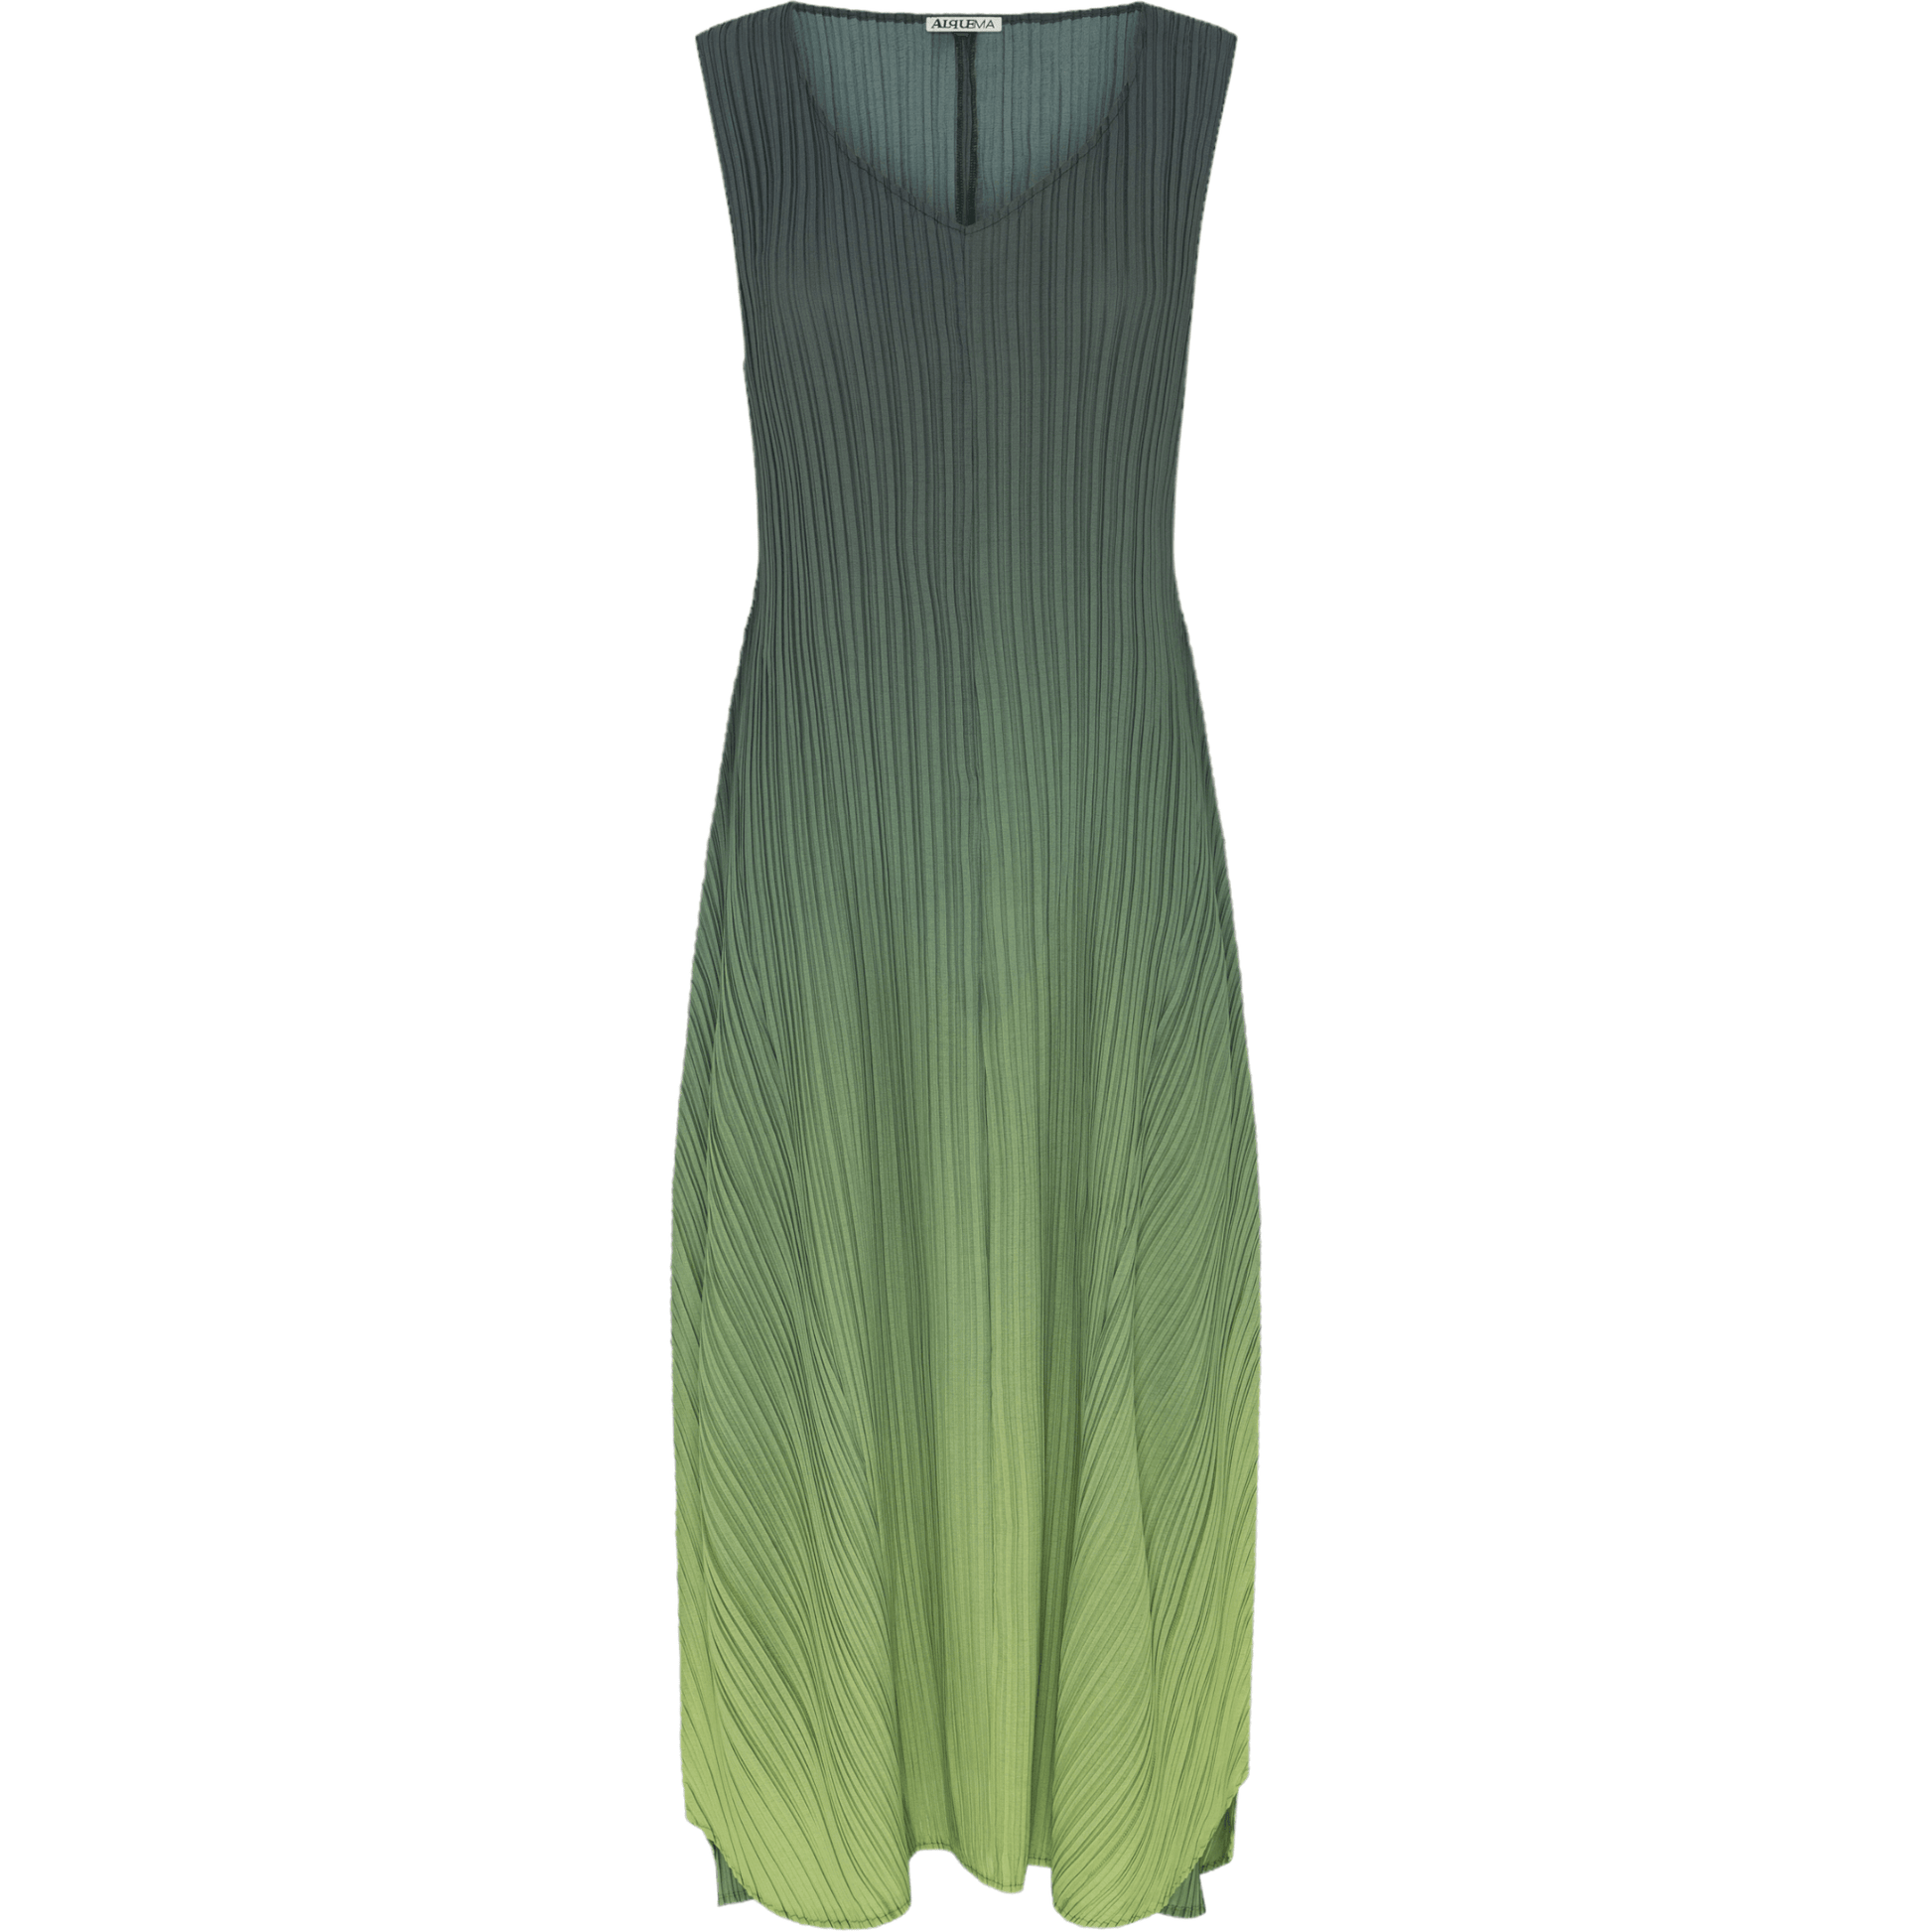 Conker Boutique Alquema Estrella Long Dress in Bisque/fern